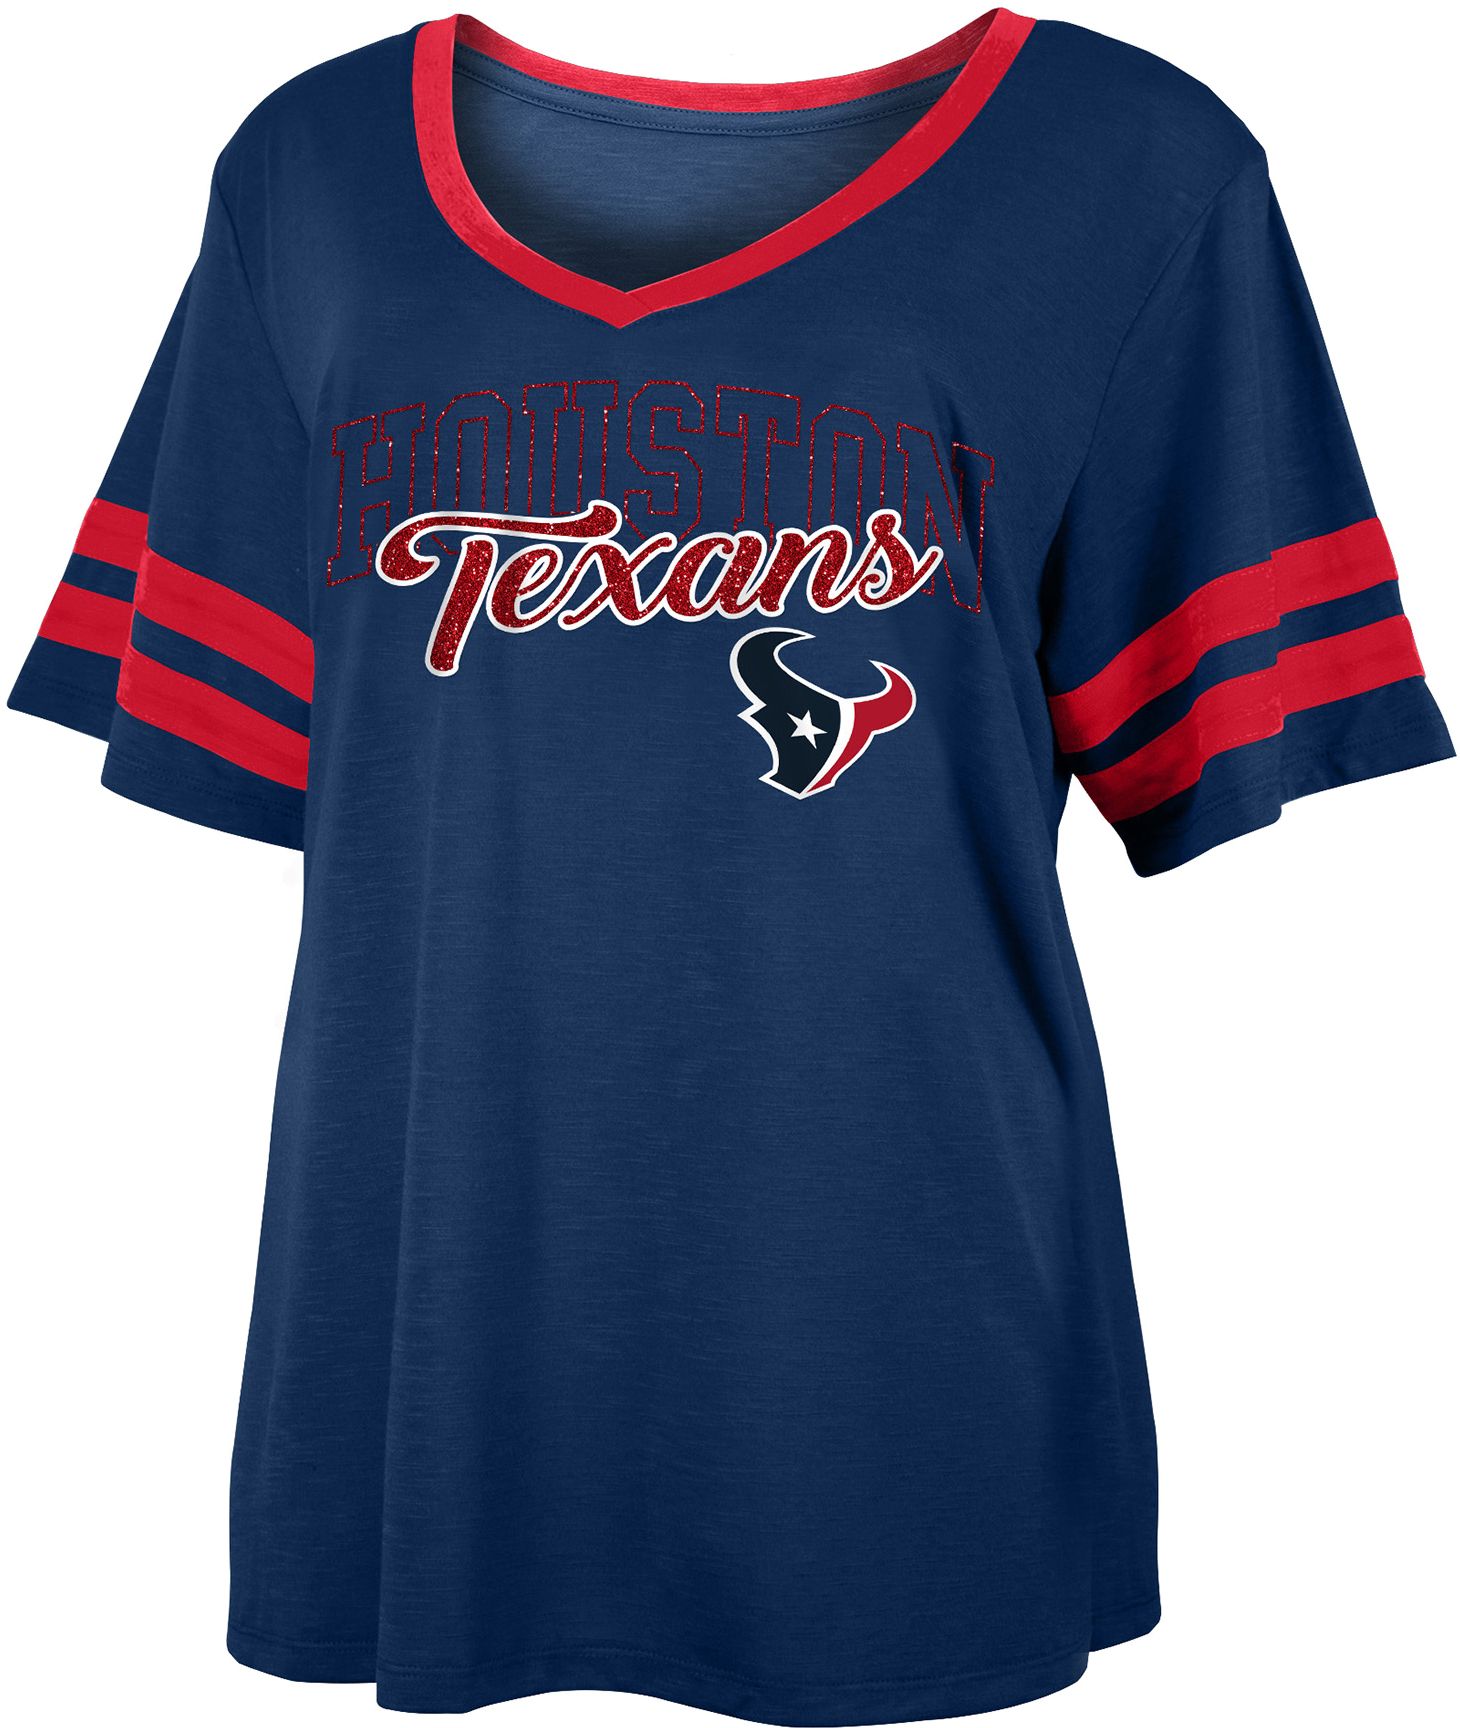 texans baseball jersey